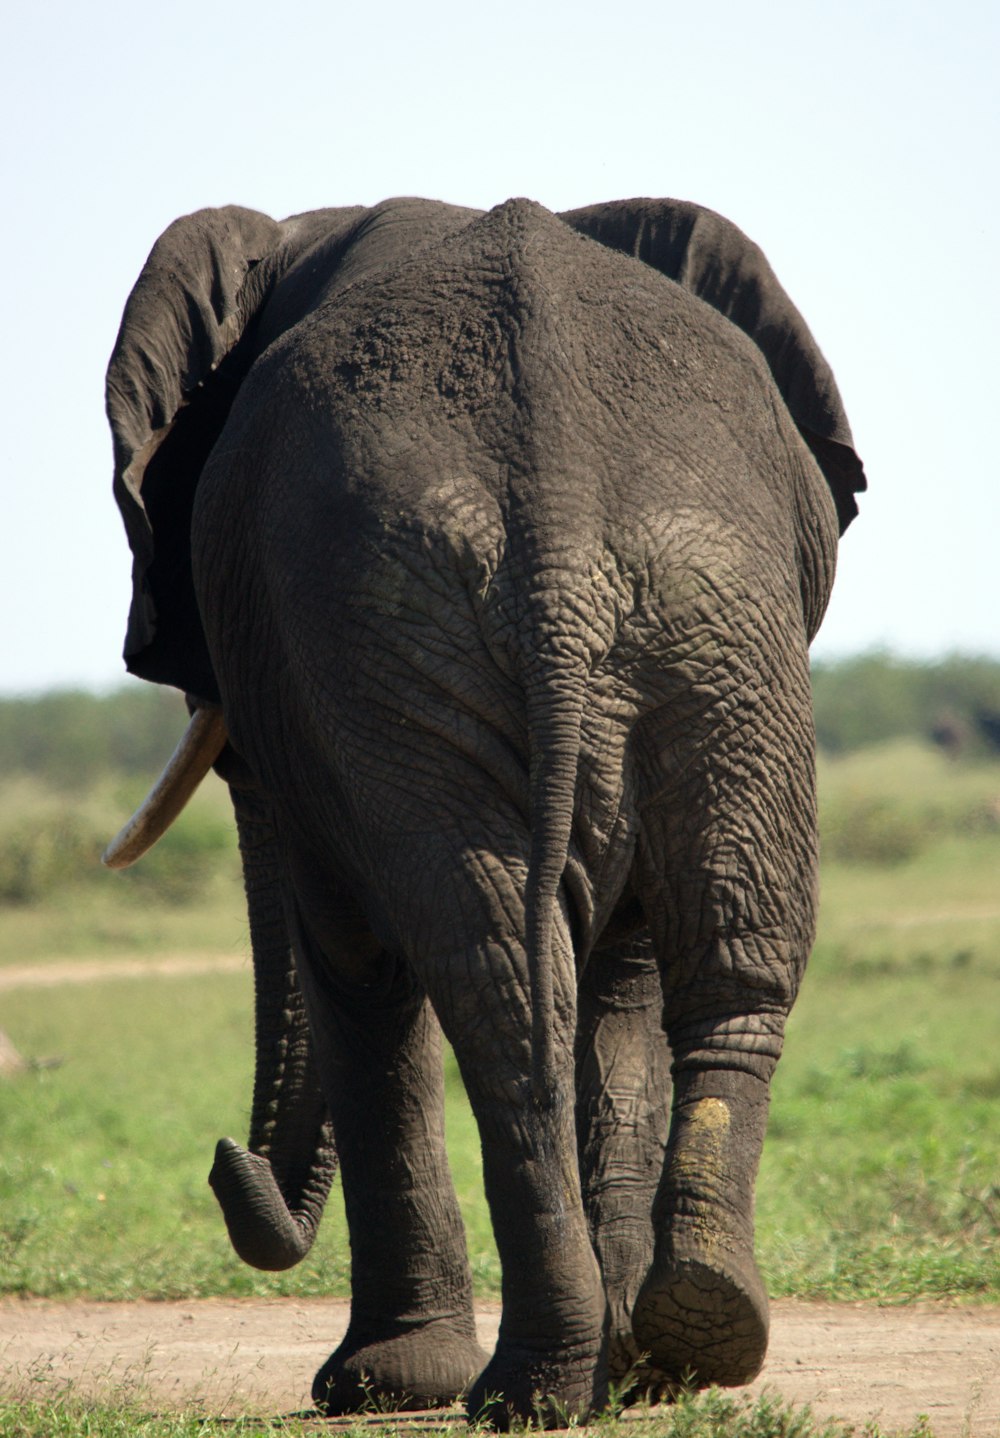 an elephant walking on a dirt road